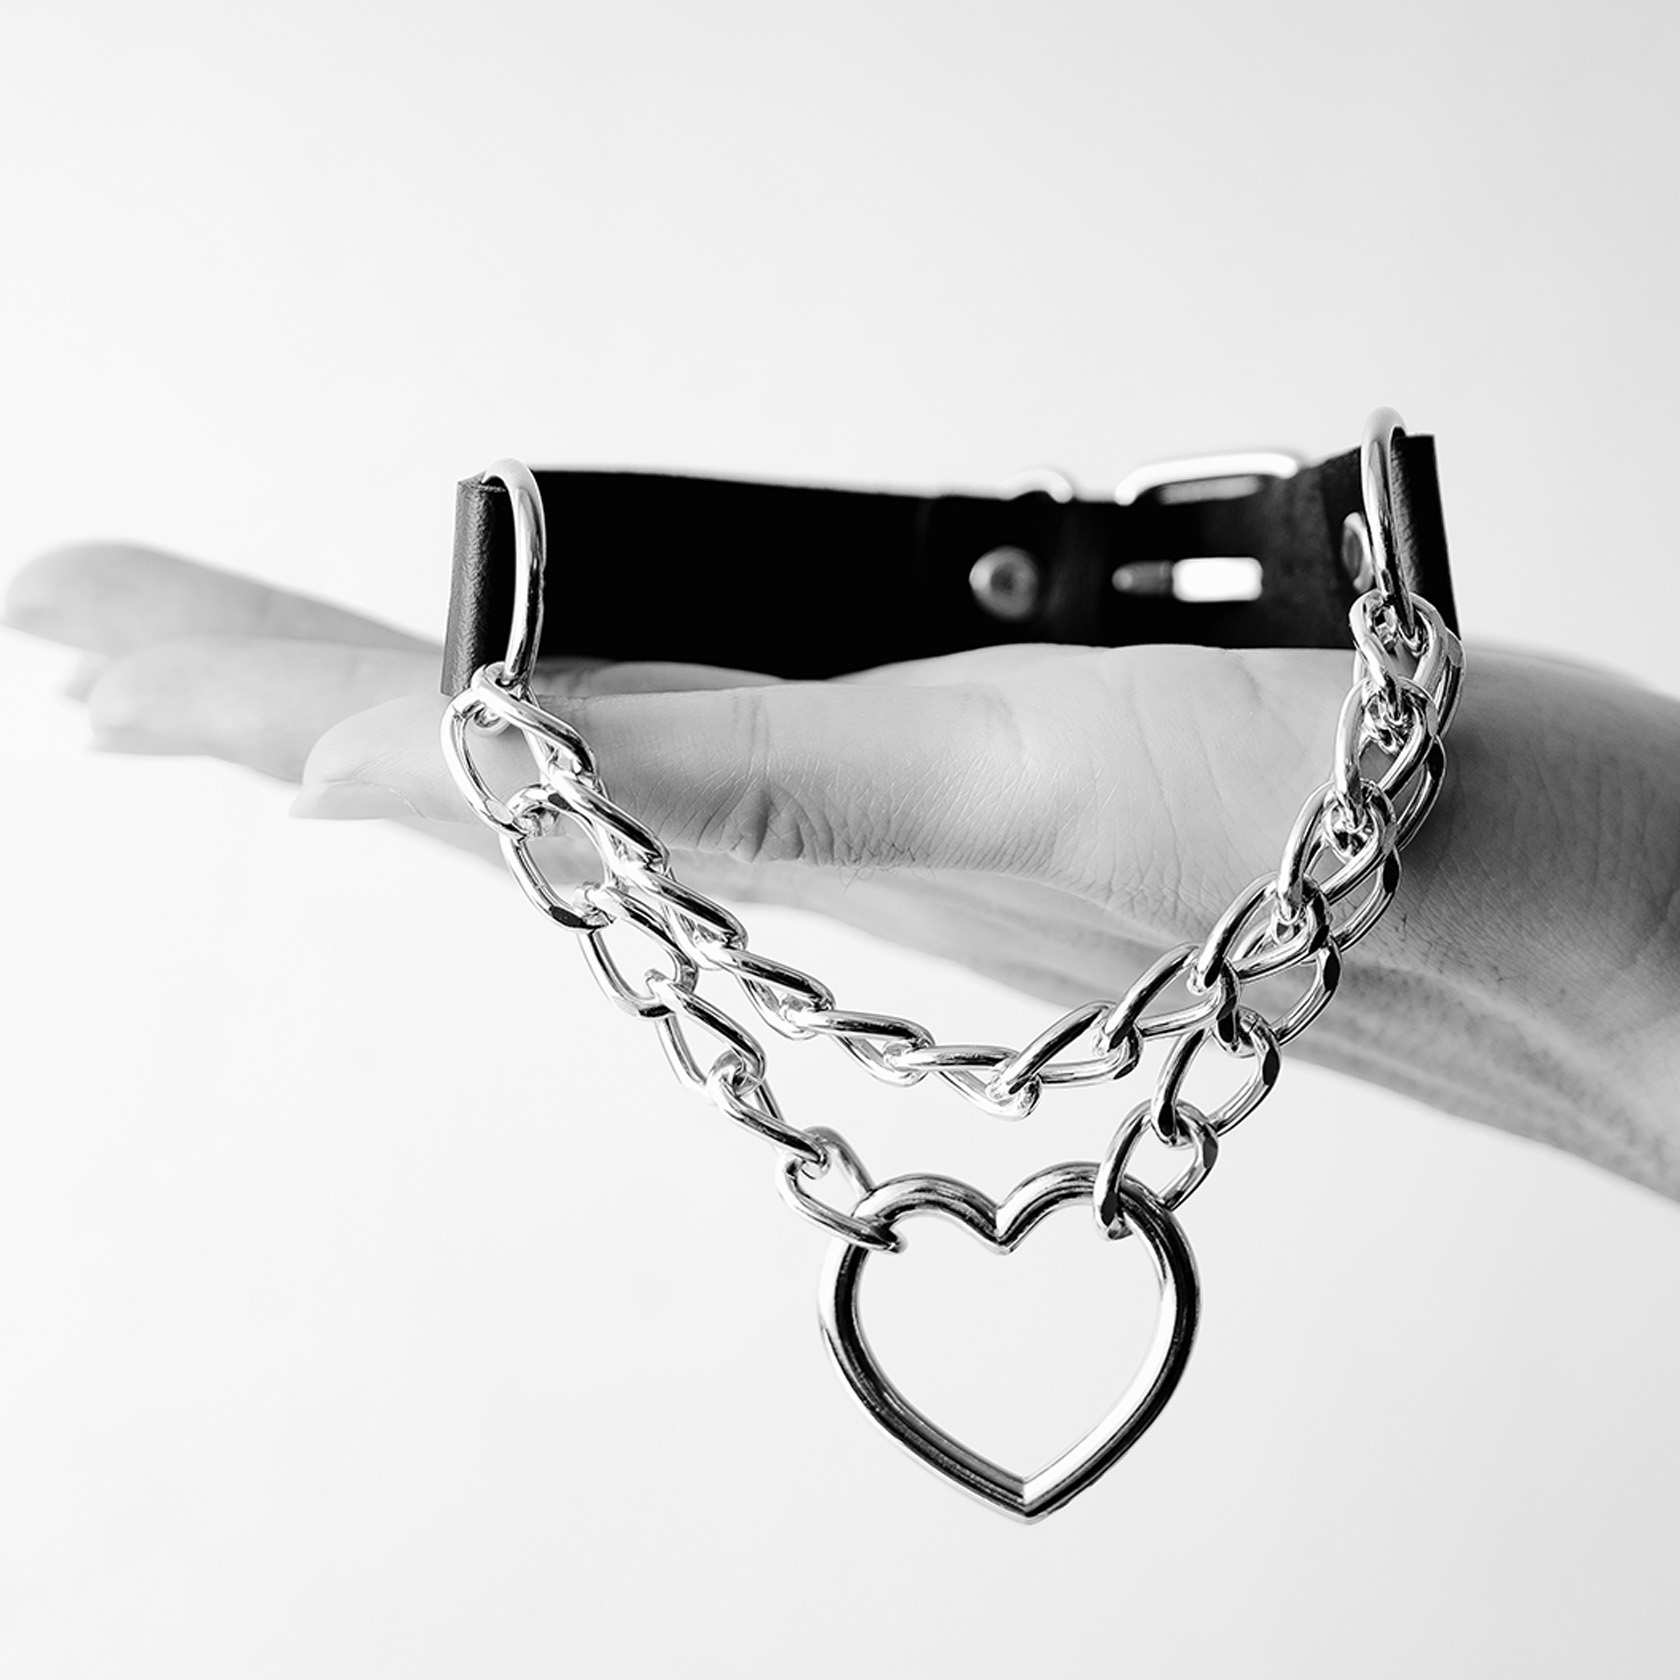 Gothic punk heart ring cuban chain adjustable neckband collar choker